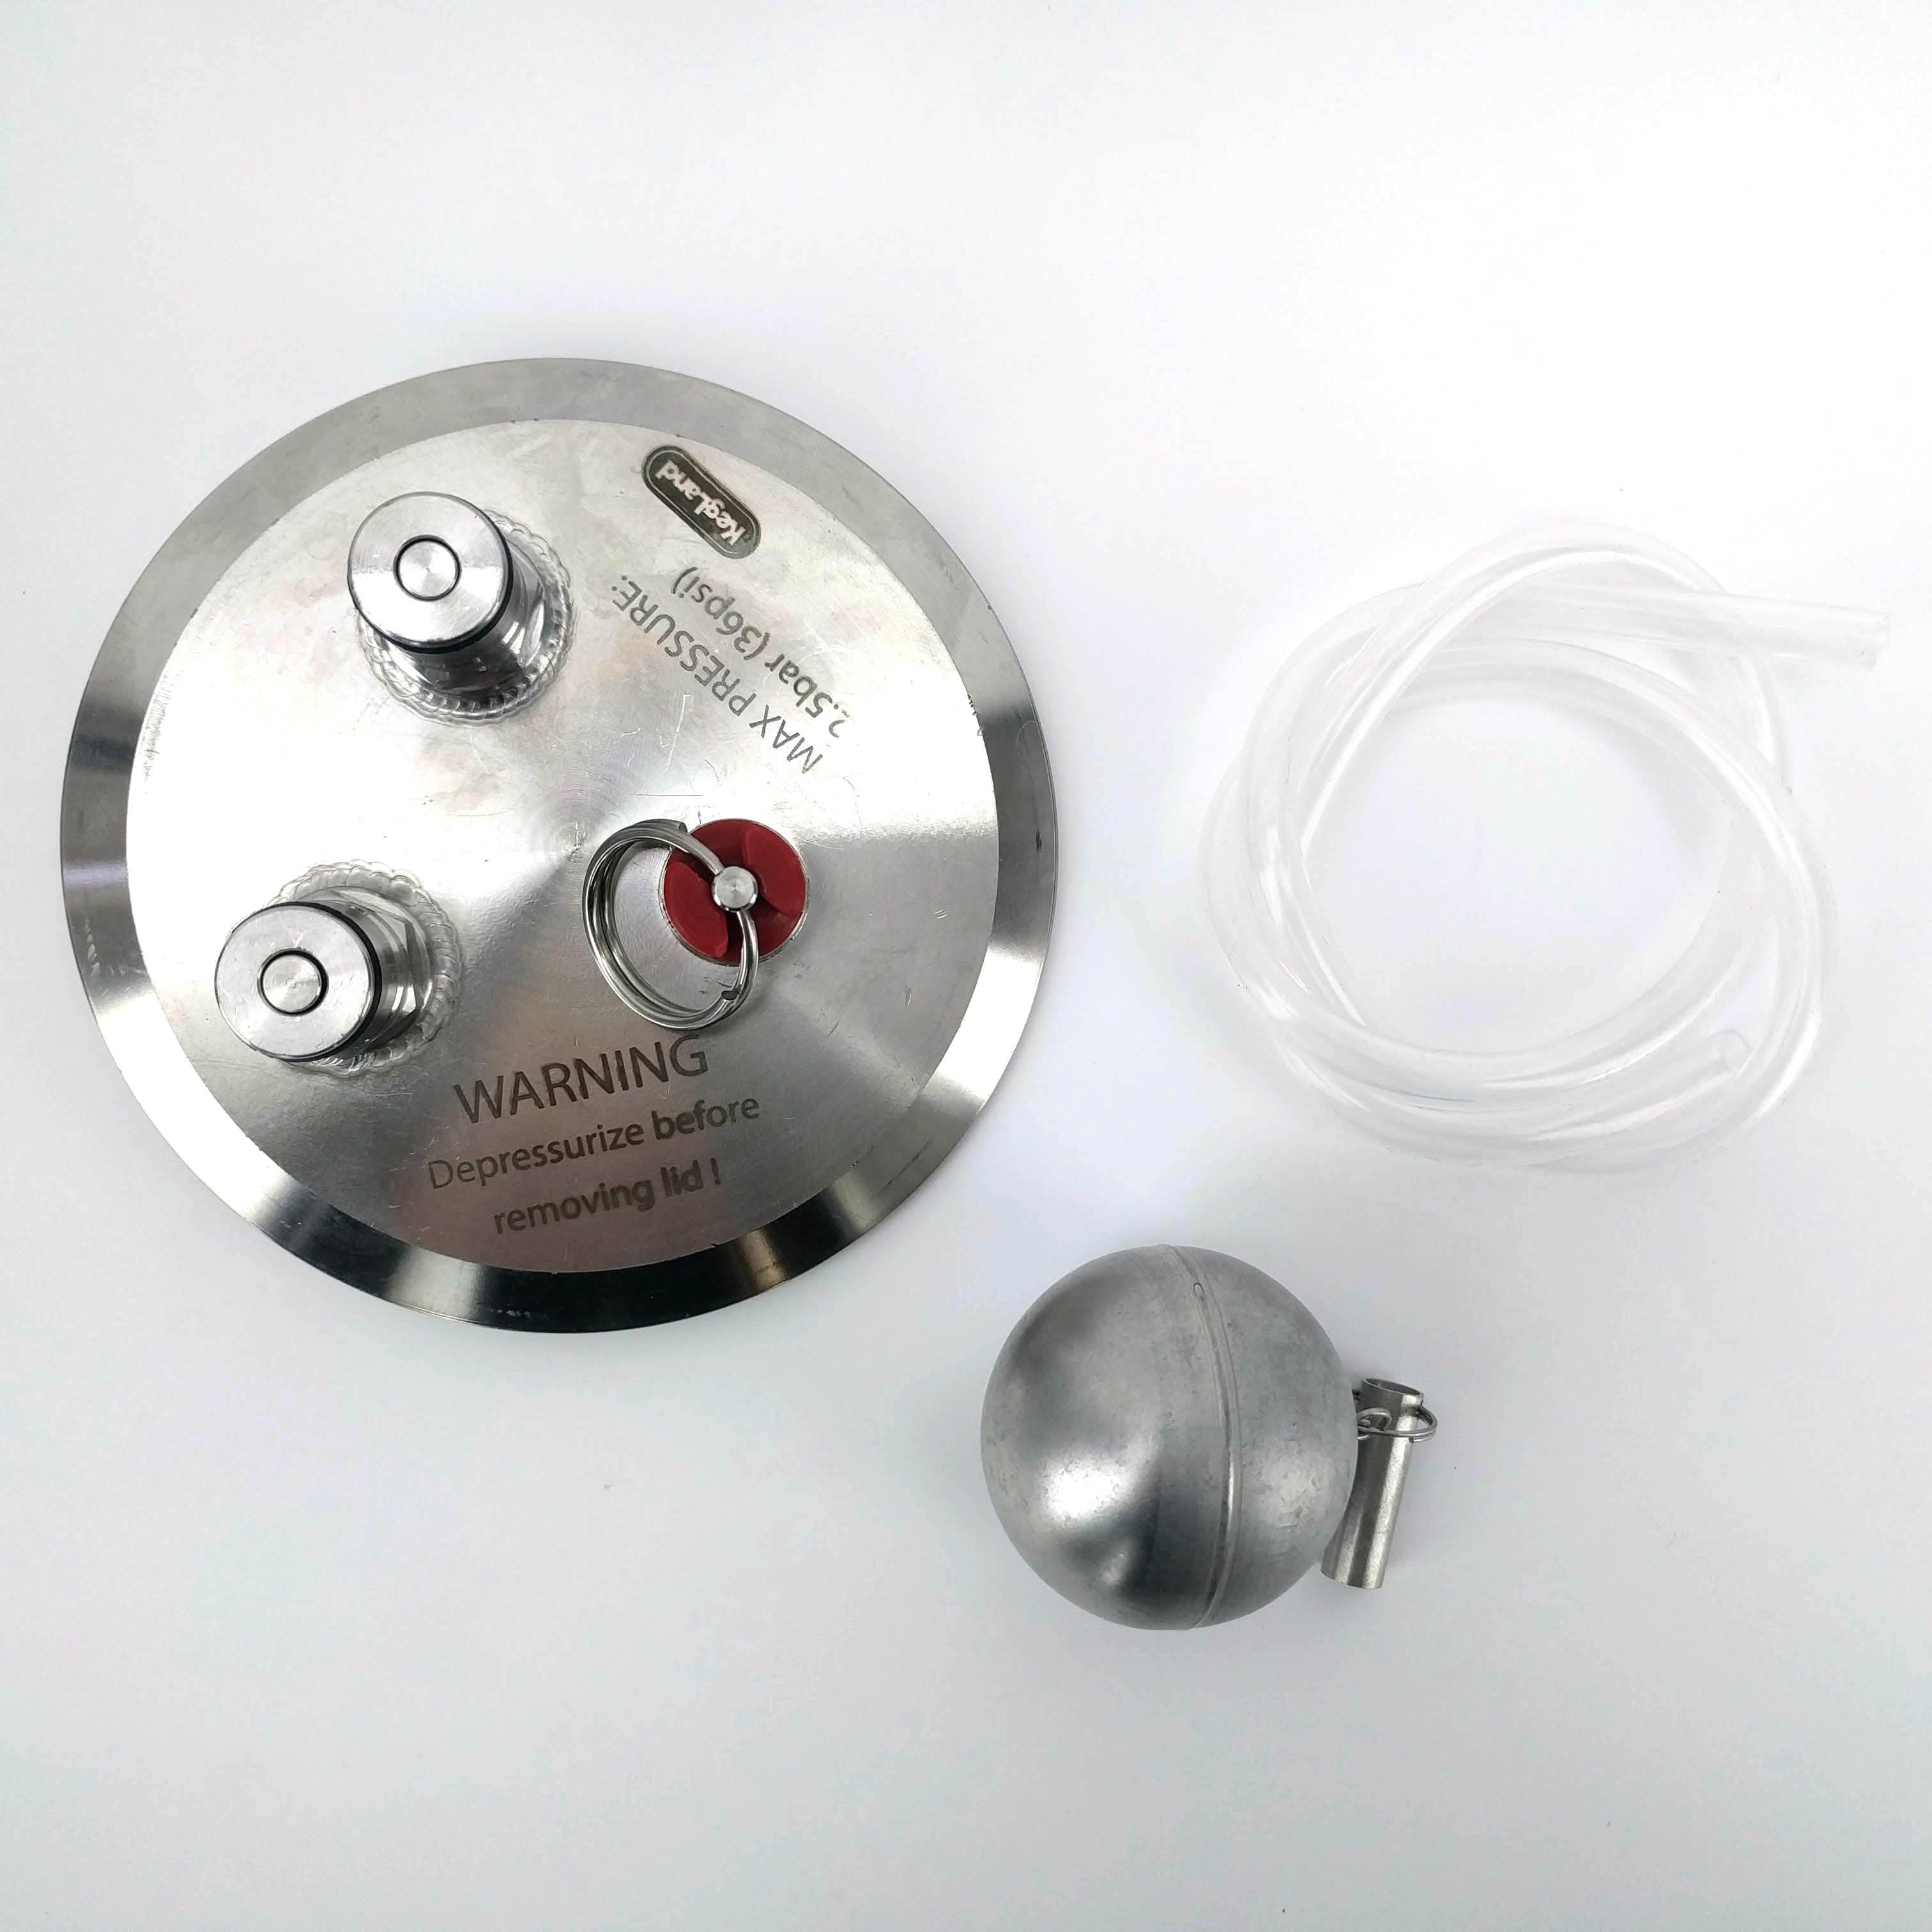 4 inch Tri-clover Kegmenter Lid with Ball Lock Posts, Floating Dip tube and PRV (Red 2.5Bar) - KegLand